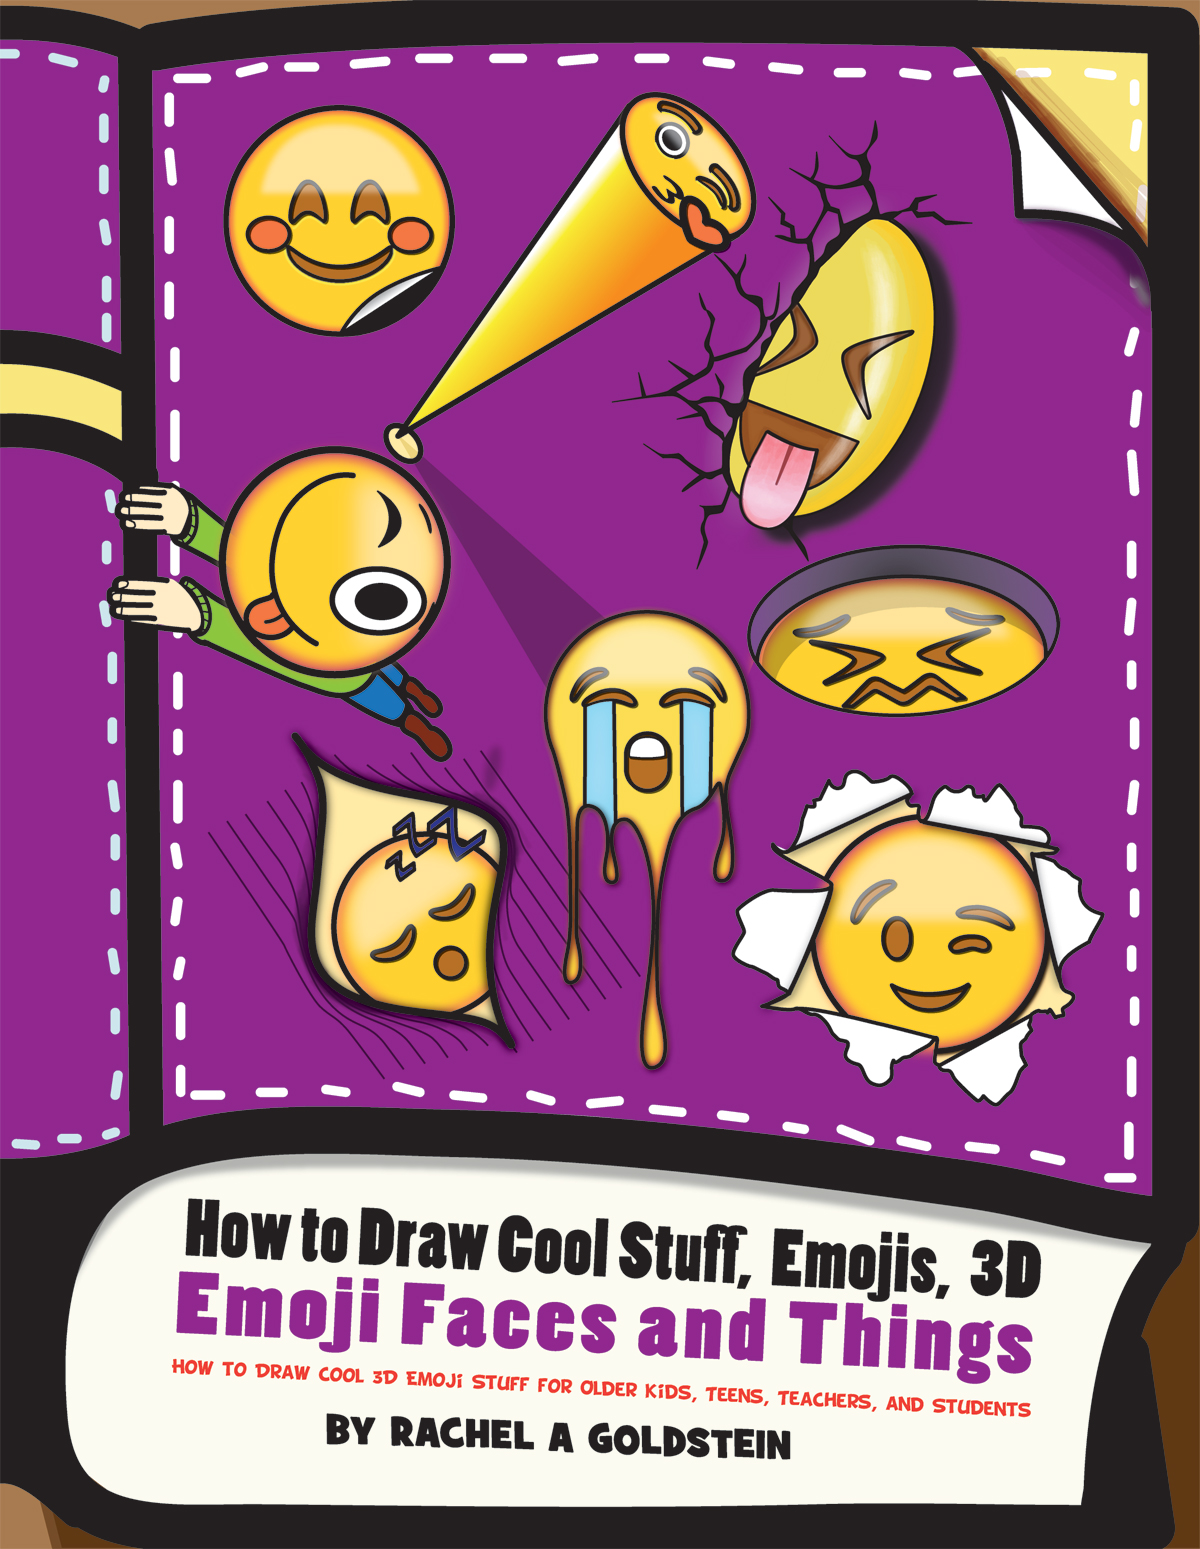 How to Draw Cool Stuff Emojis